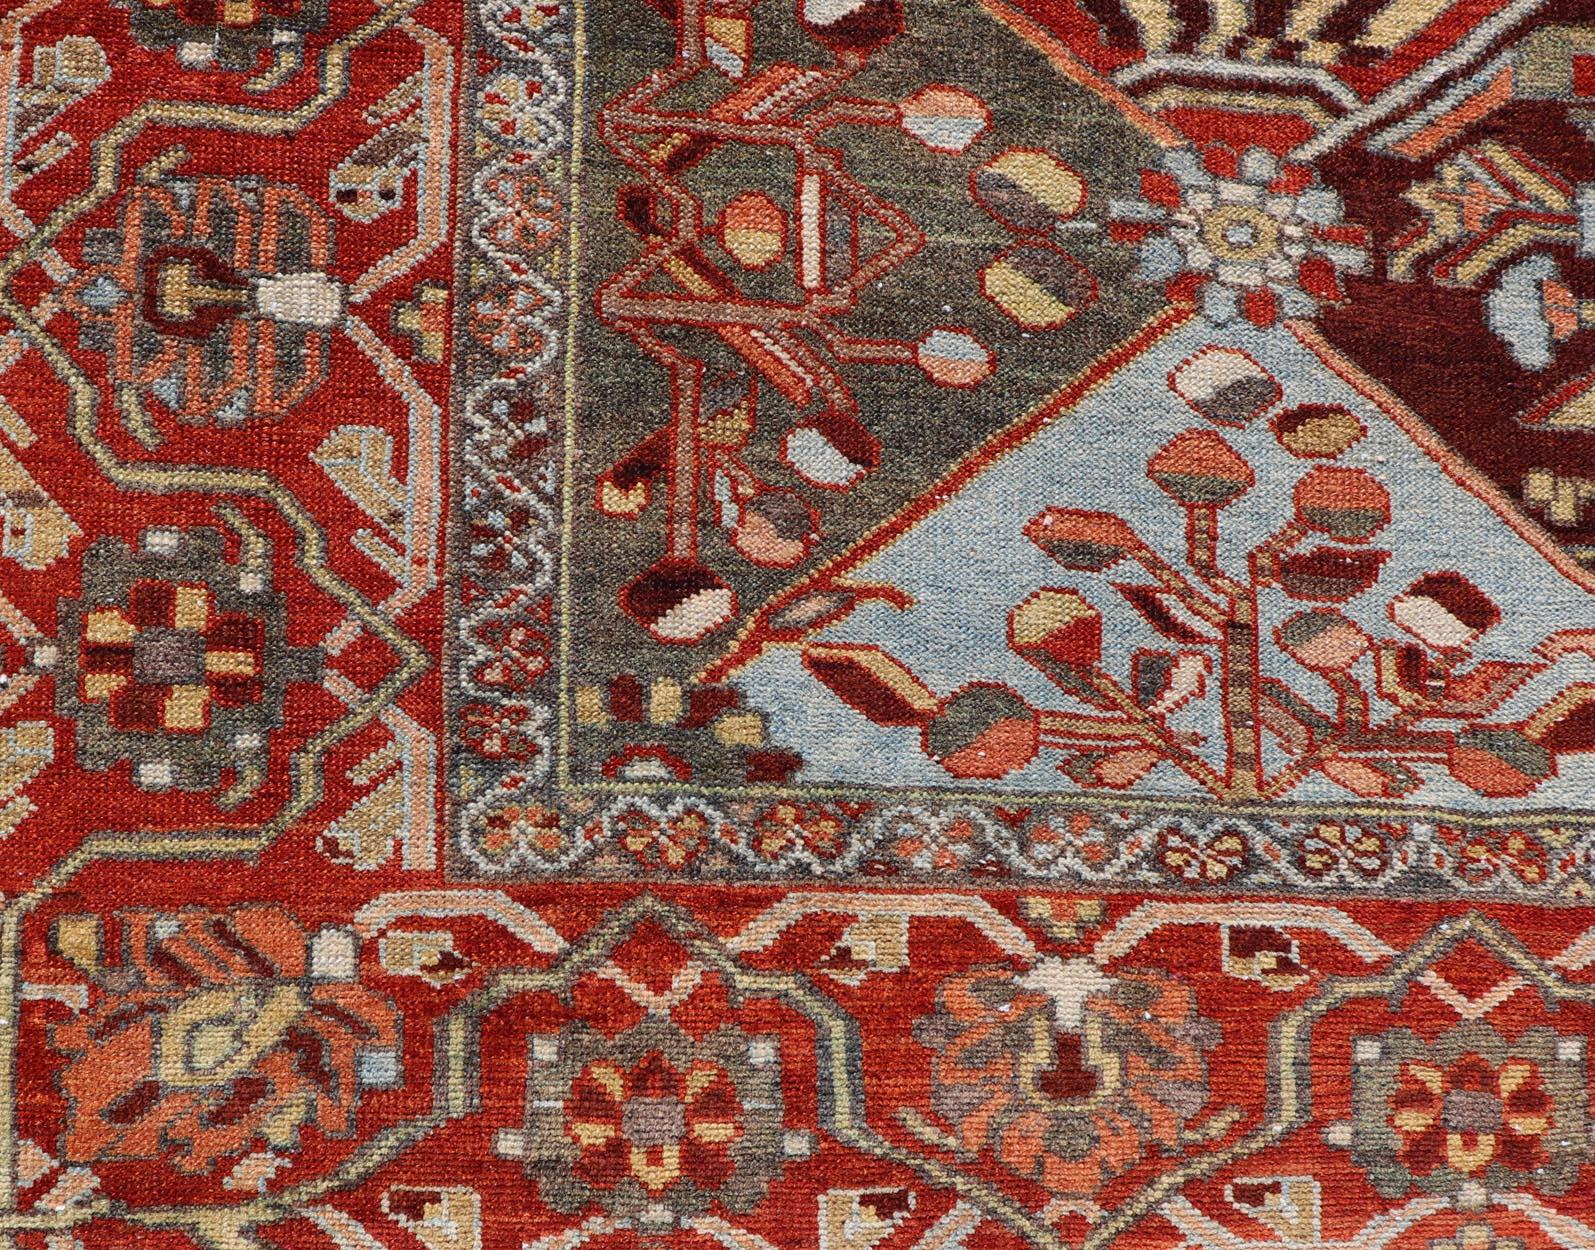 Measures: 5'0 x 8'0 
Antique Persian Bakhitari Colorful Rug in All-Over Diamond Garden Design. Keivan Woven Arts / rug EMB-22158-15045 origin / type: Iran / Bakhitari, circa 1920.

This beautiful Bakitari rug from Persia features an elaborate